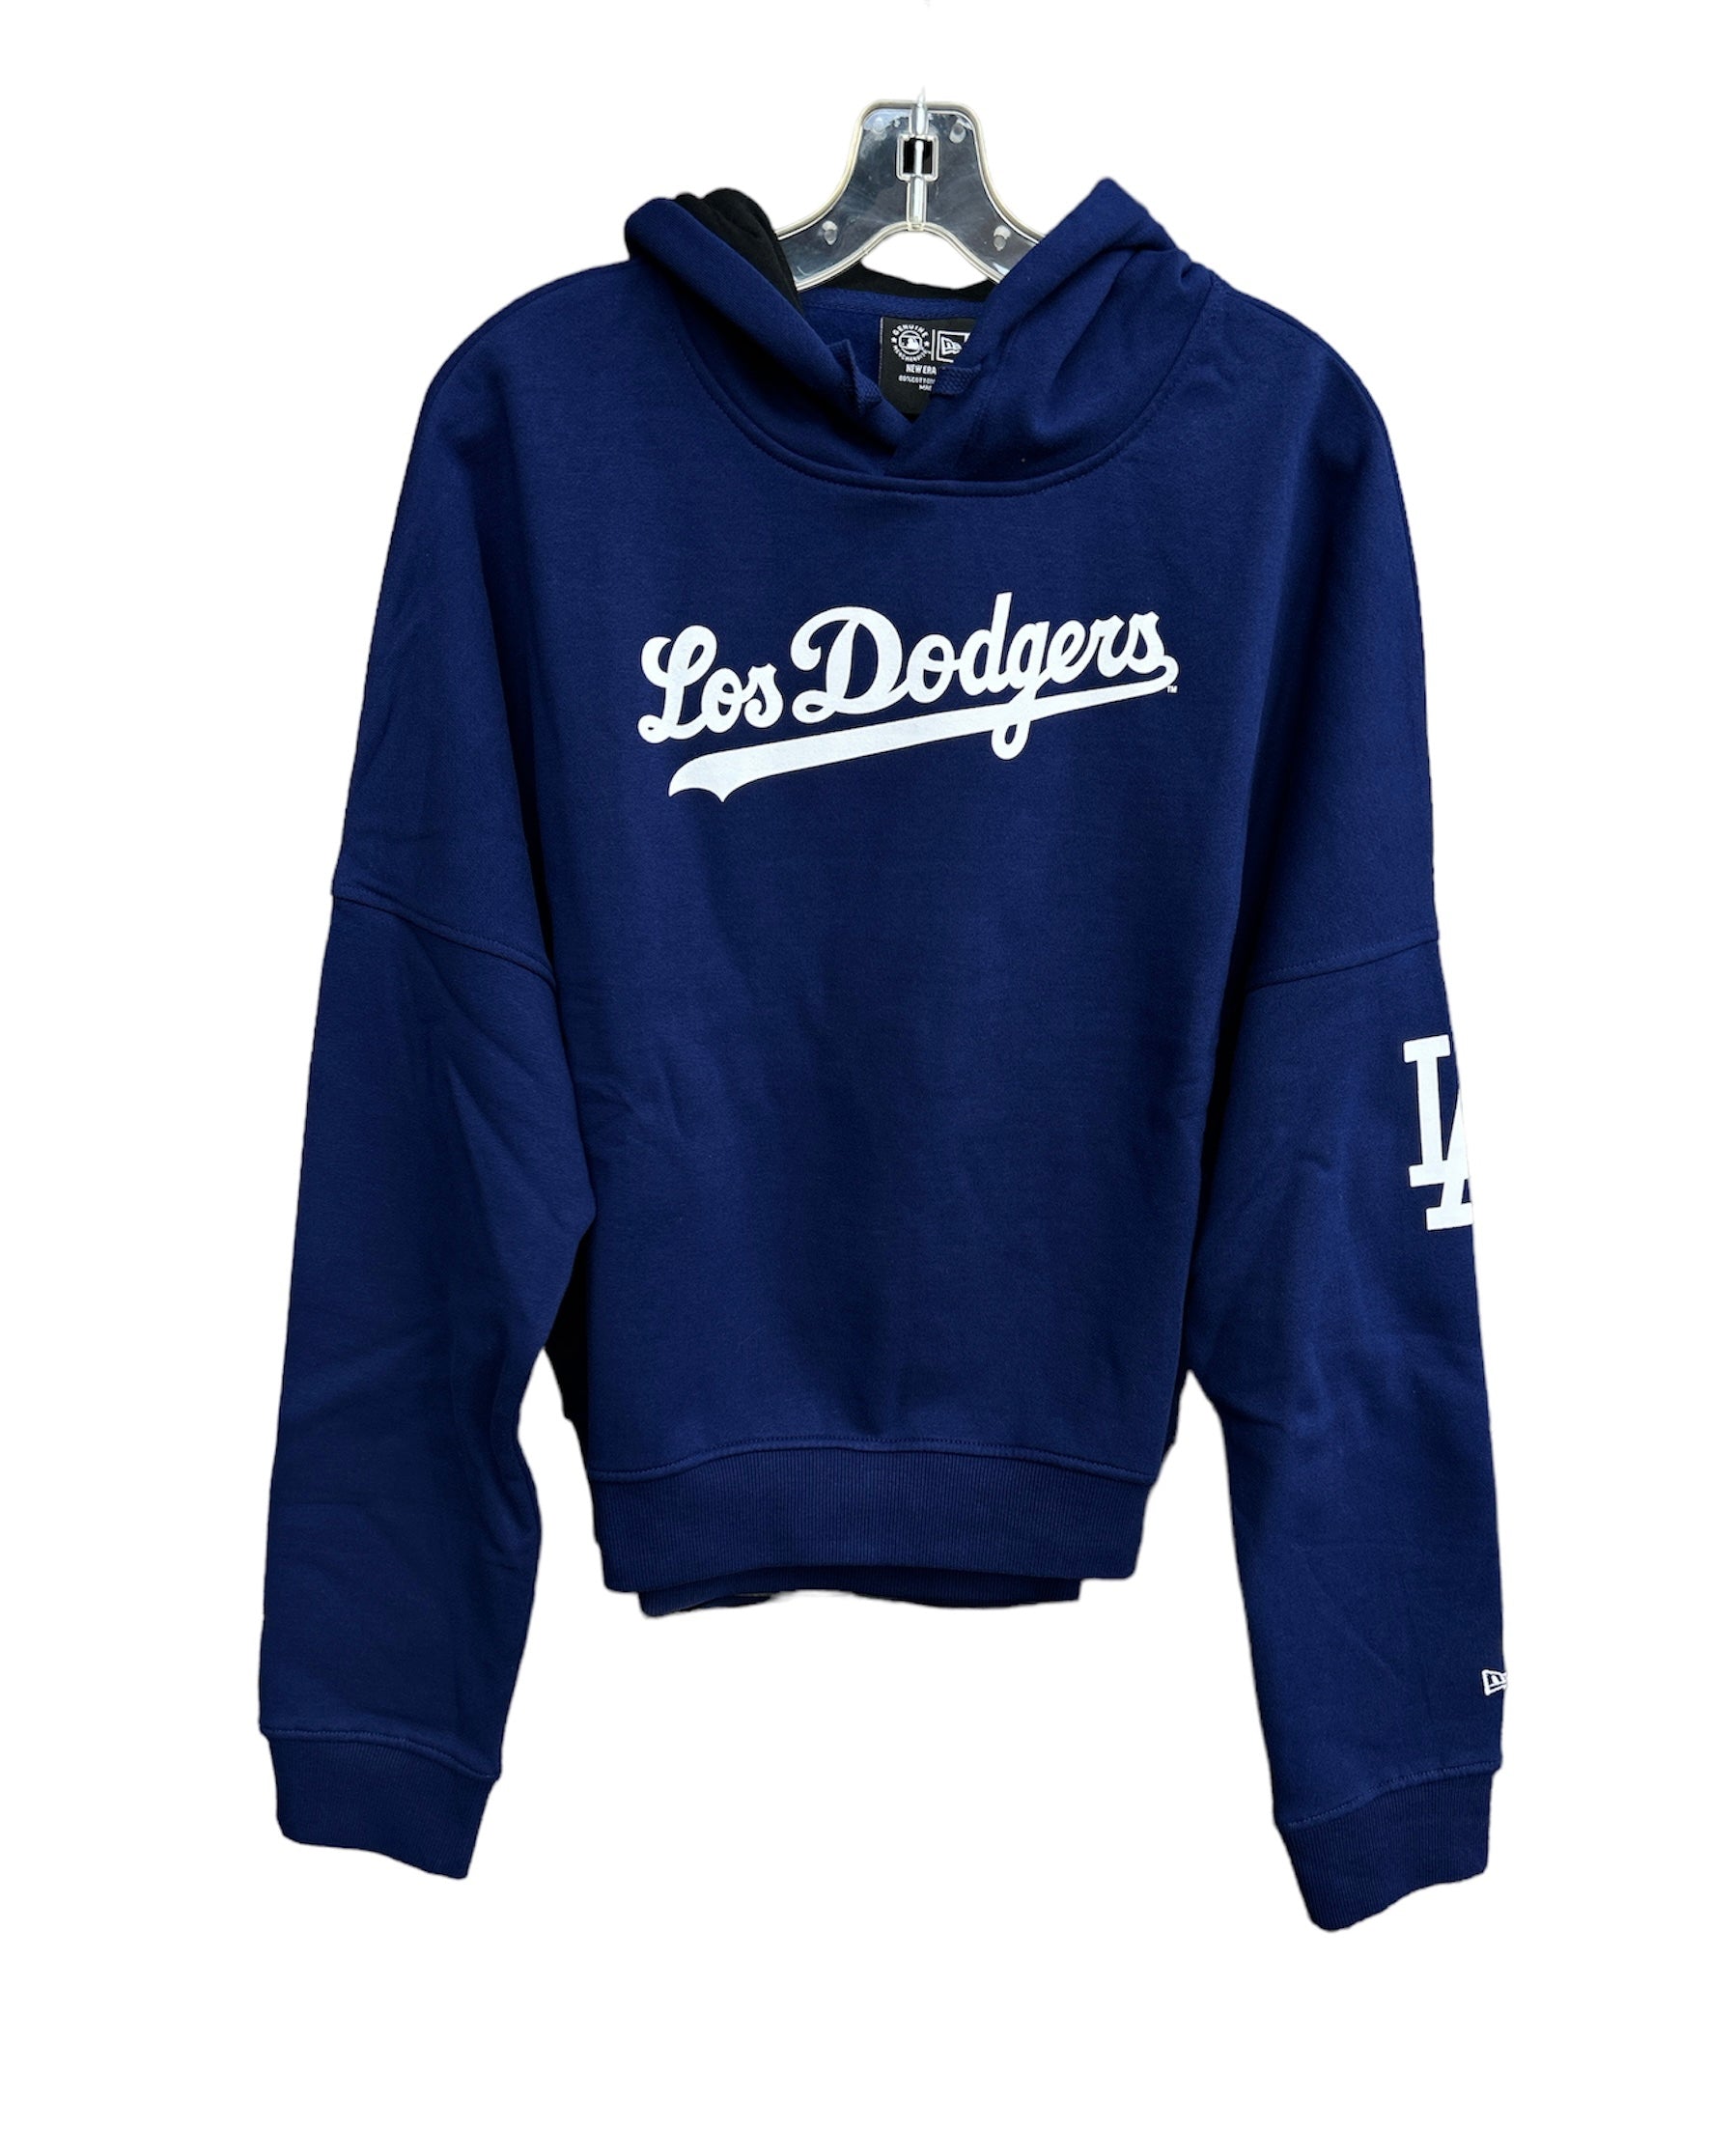 MLB Los Angeles Dodgers Men's Short Sleeve Core T-Shirt - S